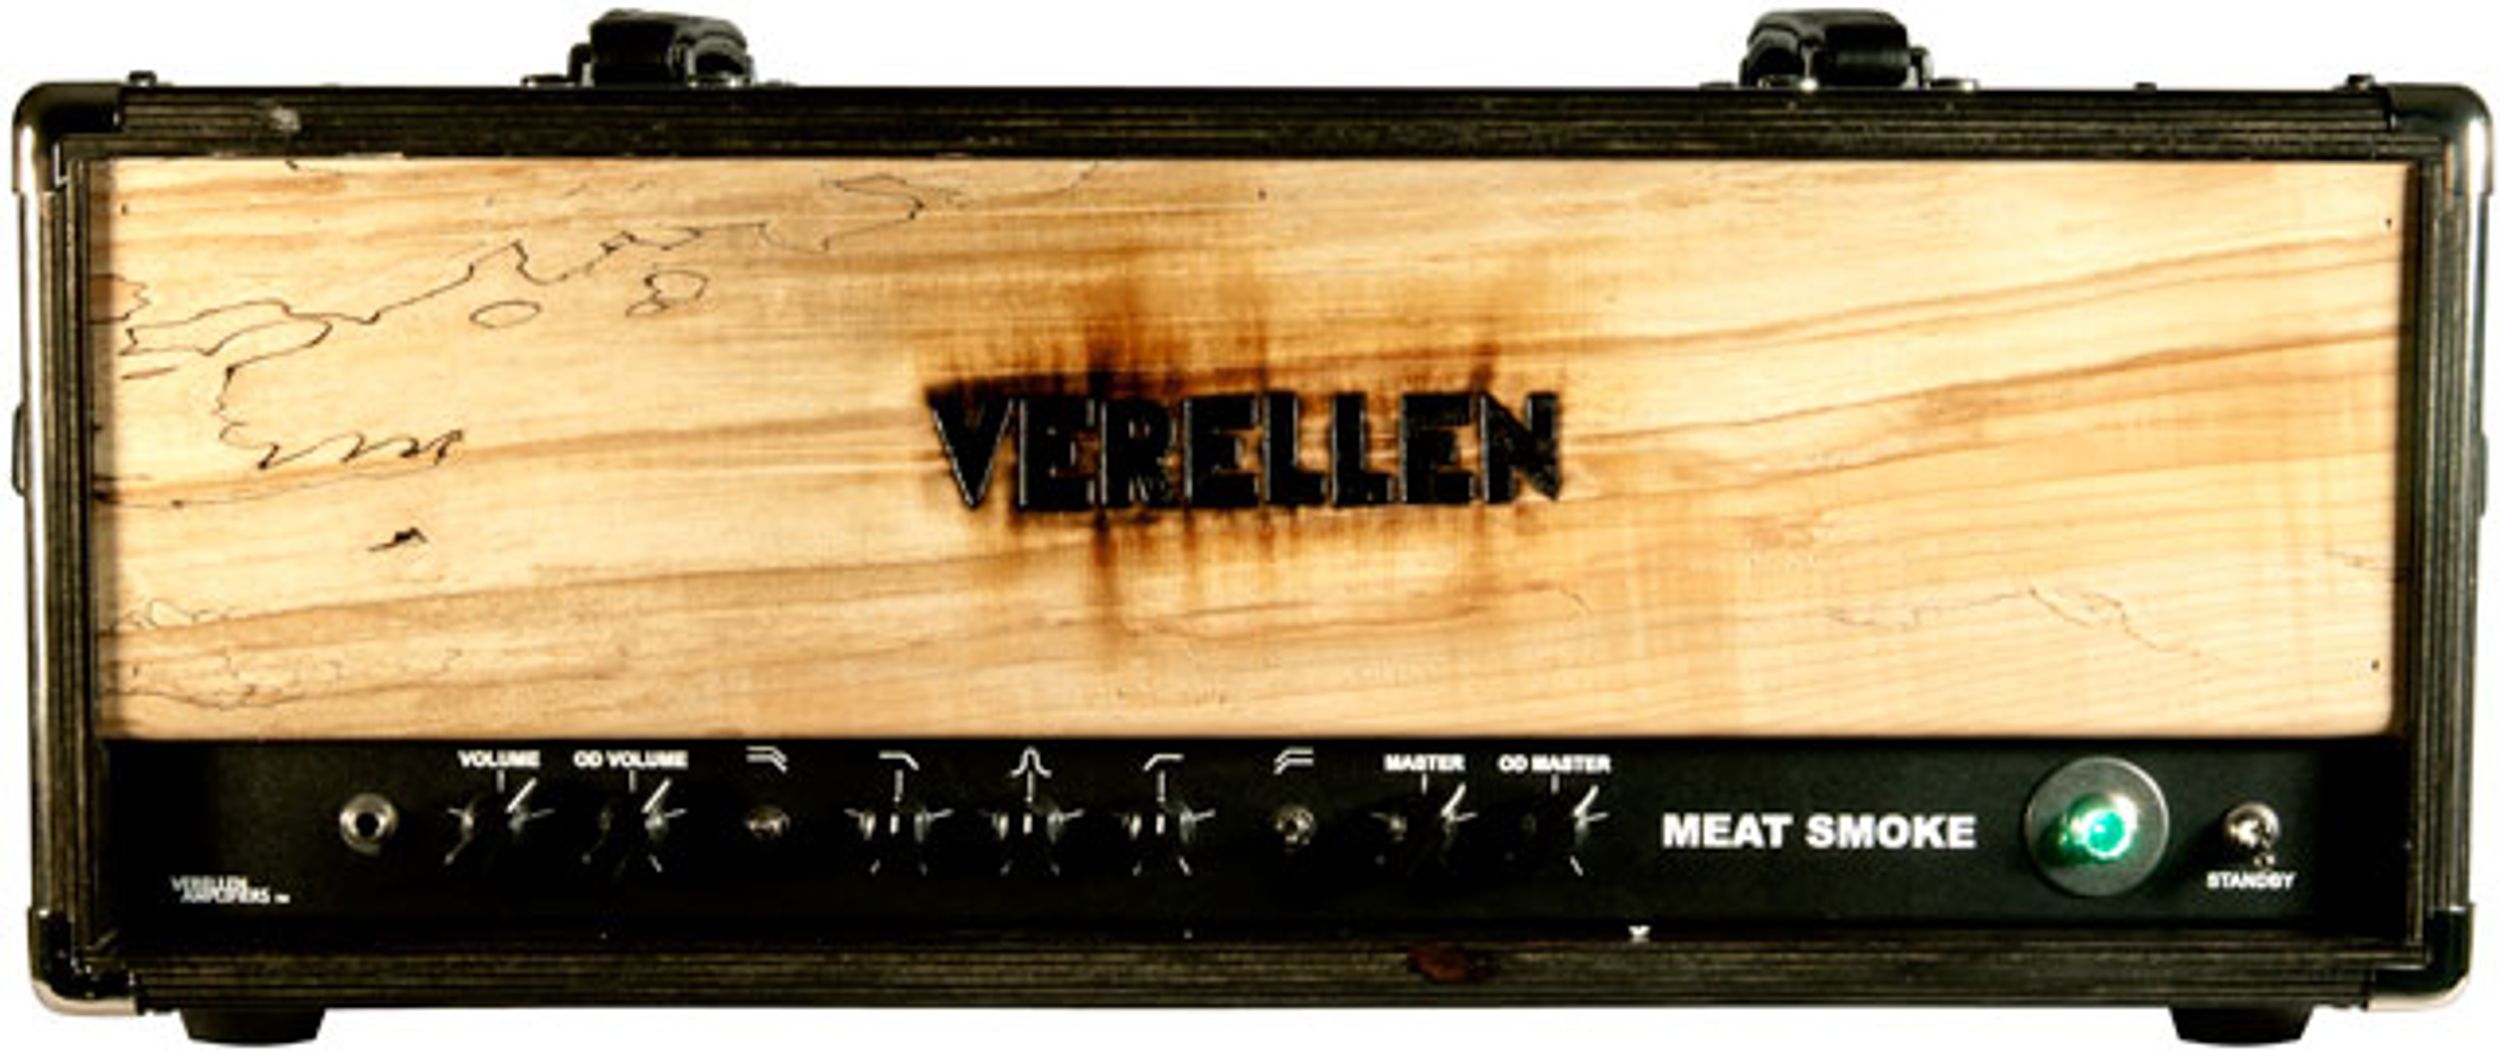 Verellen Meat Smoke Amplifier Review